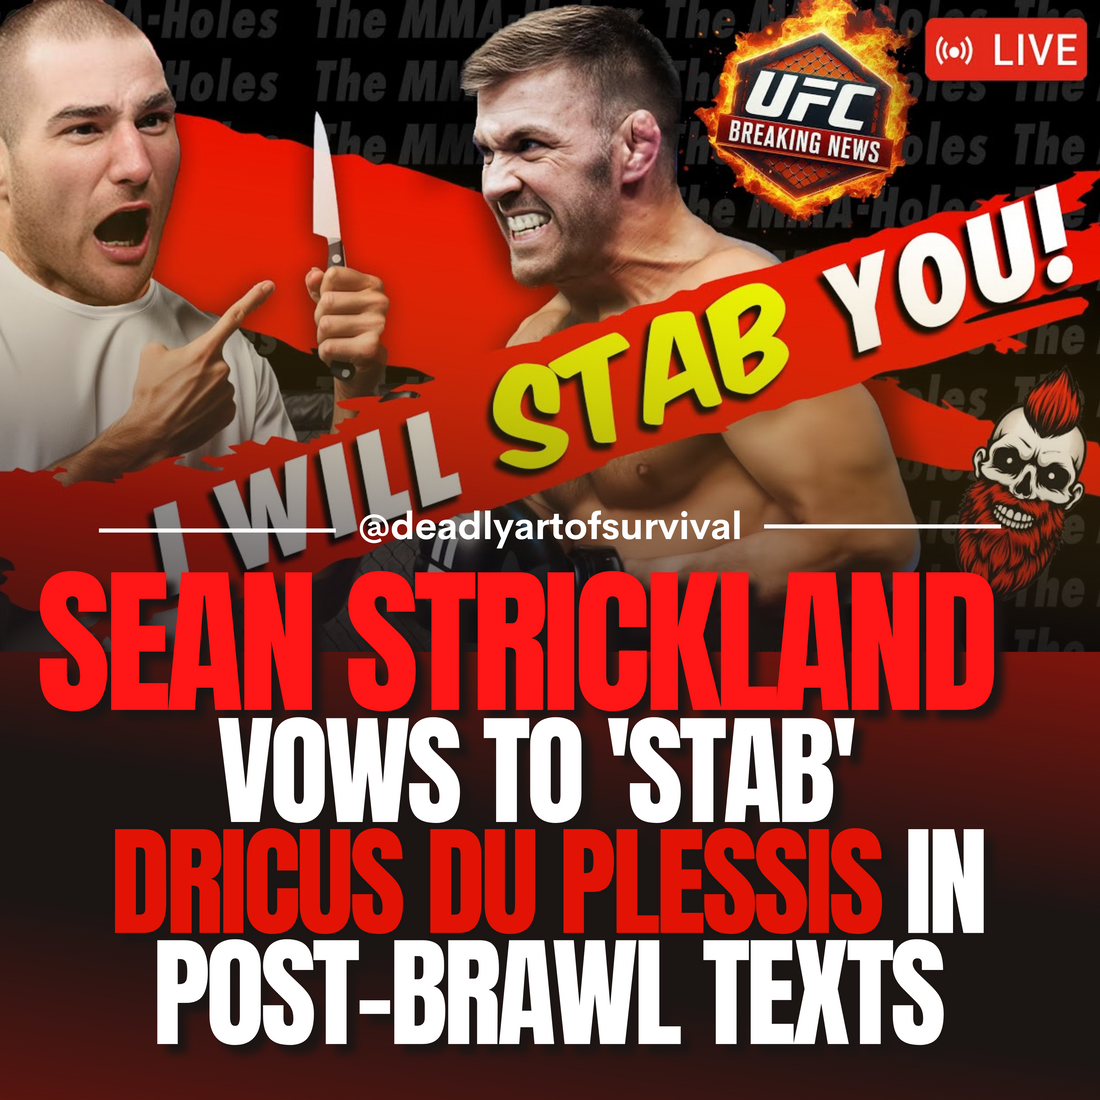 UFC-297-Drama-Sean-Strickland-Issues-Threats-Vows-to-Stab-Dricus-Du-Plessis-in-Post-Brawl-Texts deadlyartofsurvival.com